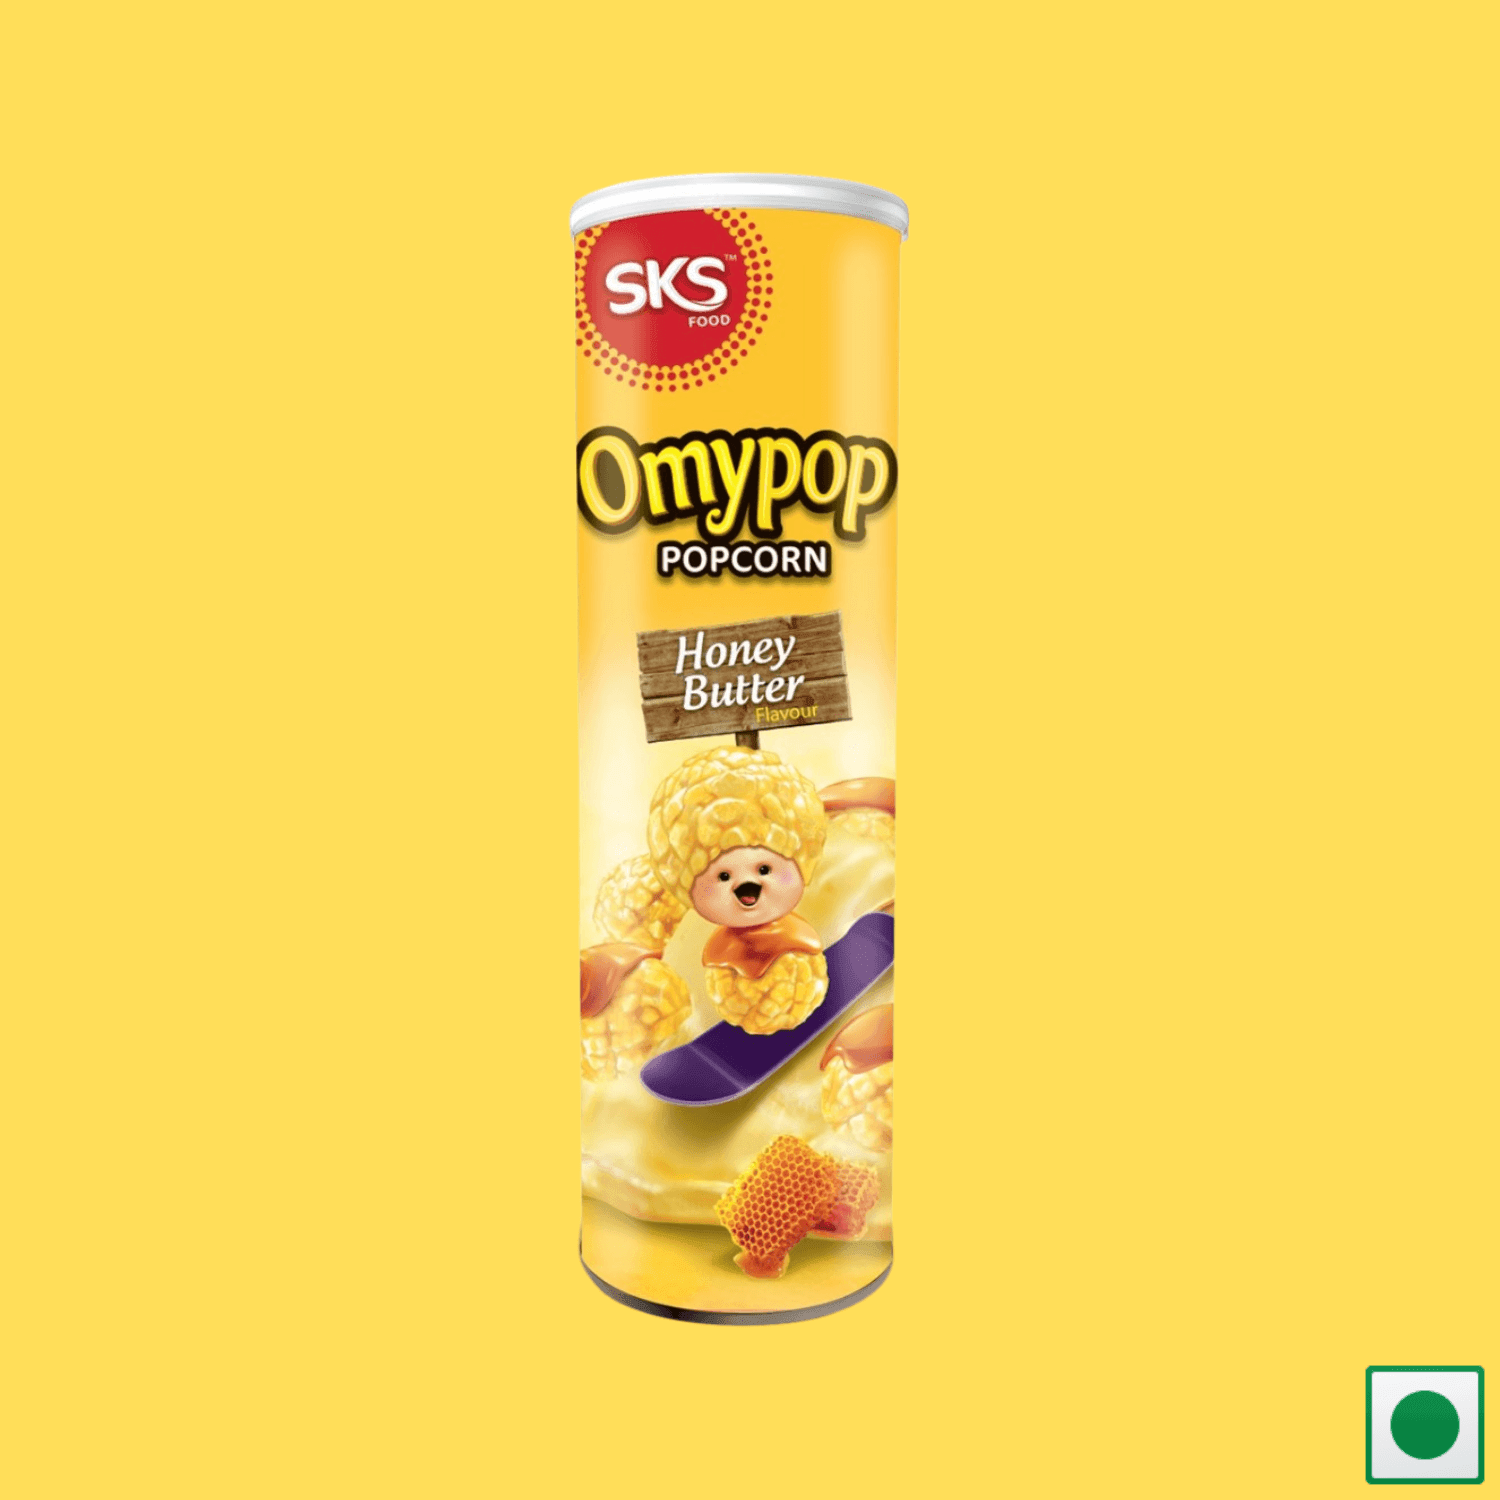 Omypop Popcorn - Honey Butter, 85g (IMPORTED) - Super 7 Mart